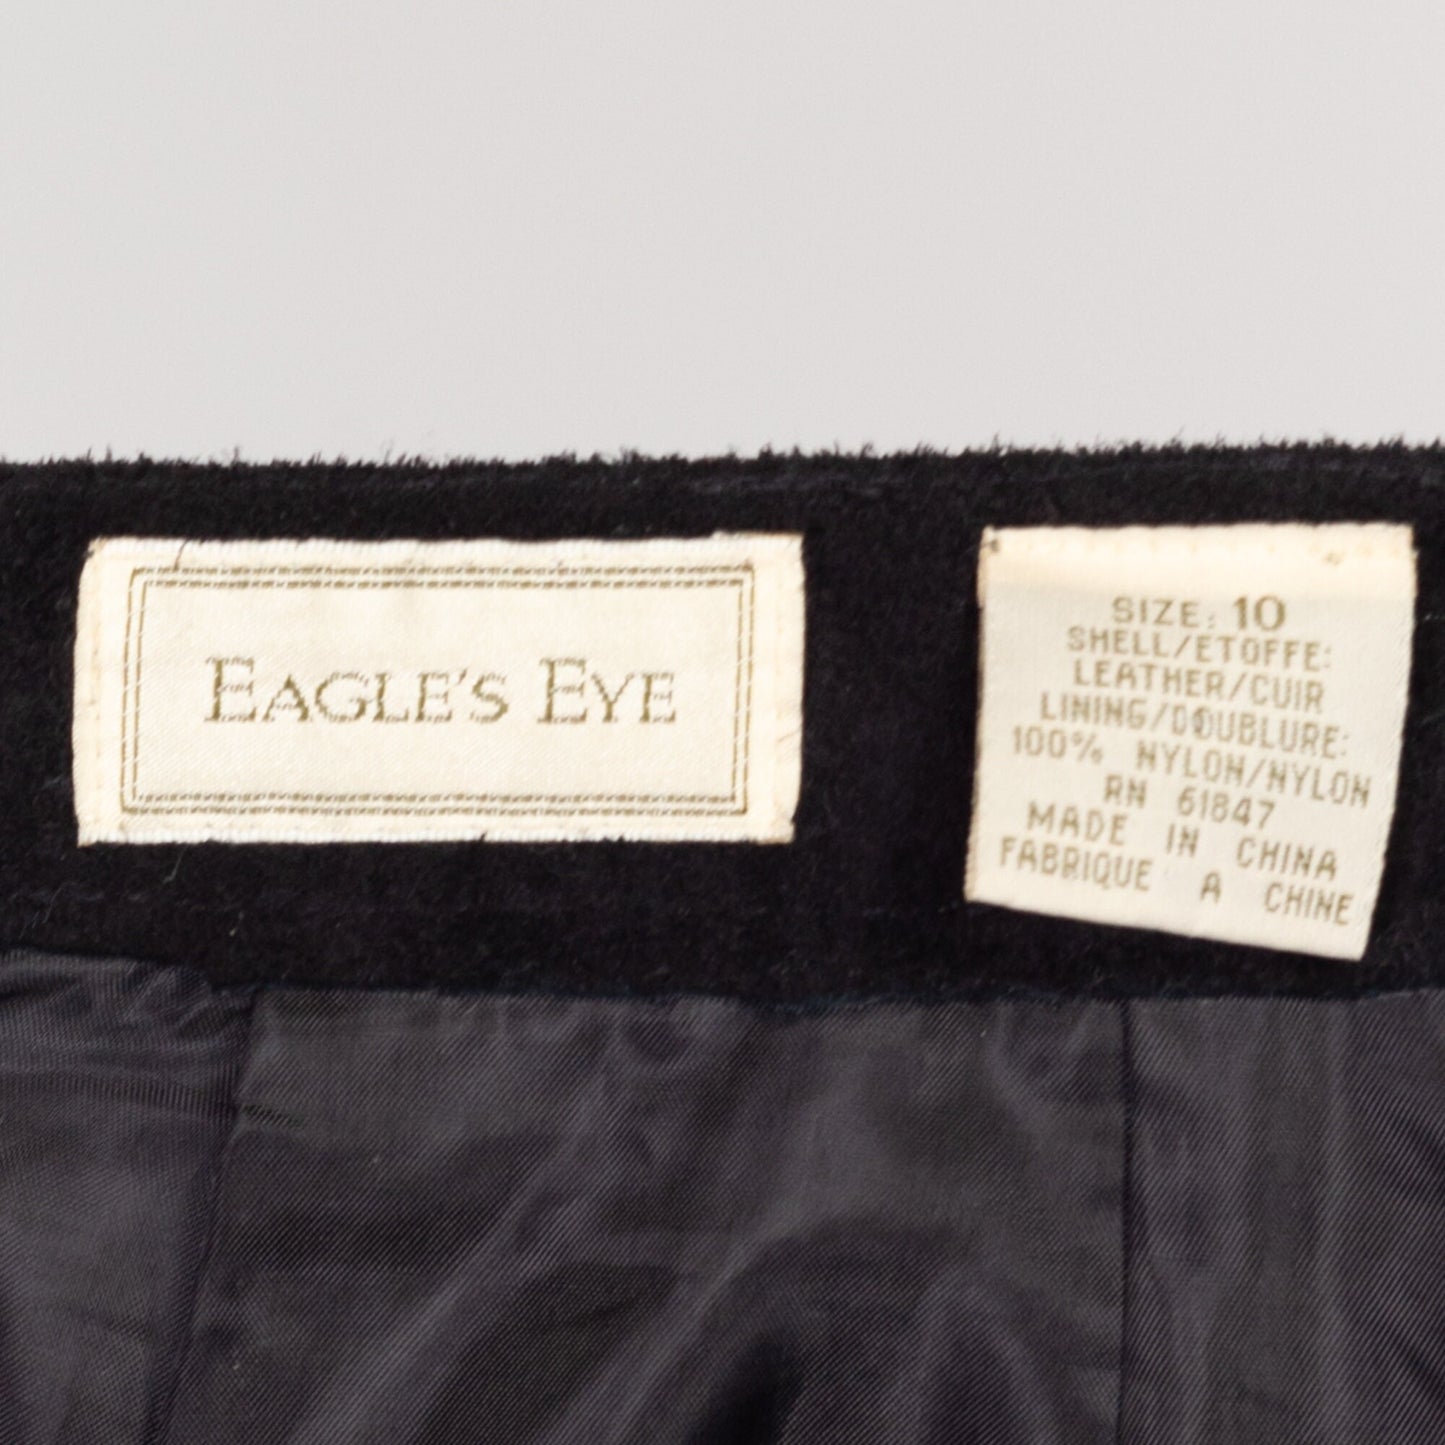 Medium 90s Black Suede Maxi Skirt 28.5" | Vintage Boho A Line Leather High Waisted Skirt